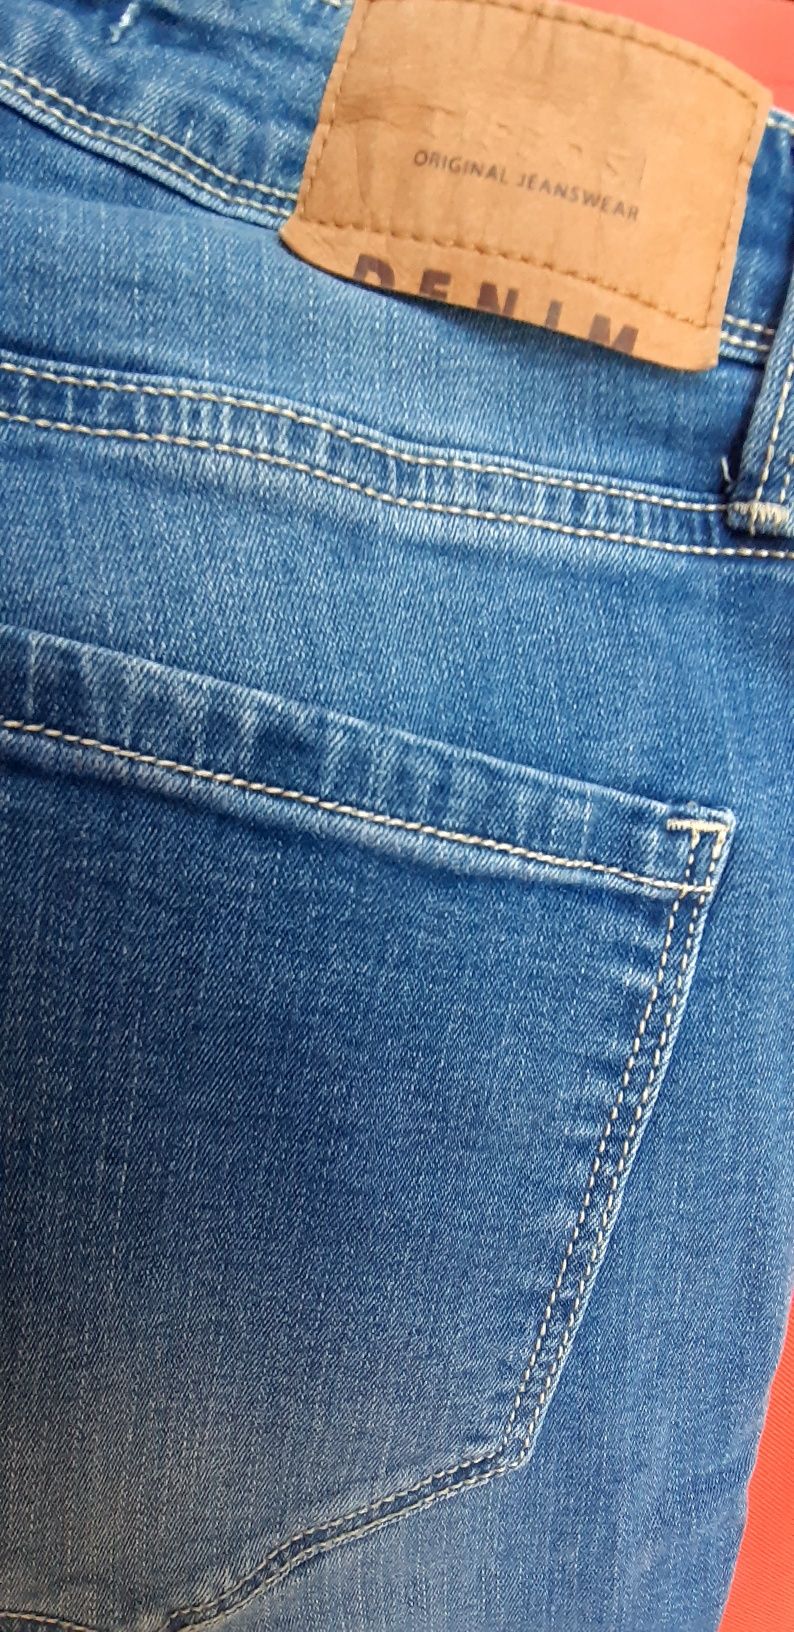 Calças jeans tiffosi